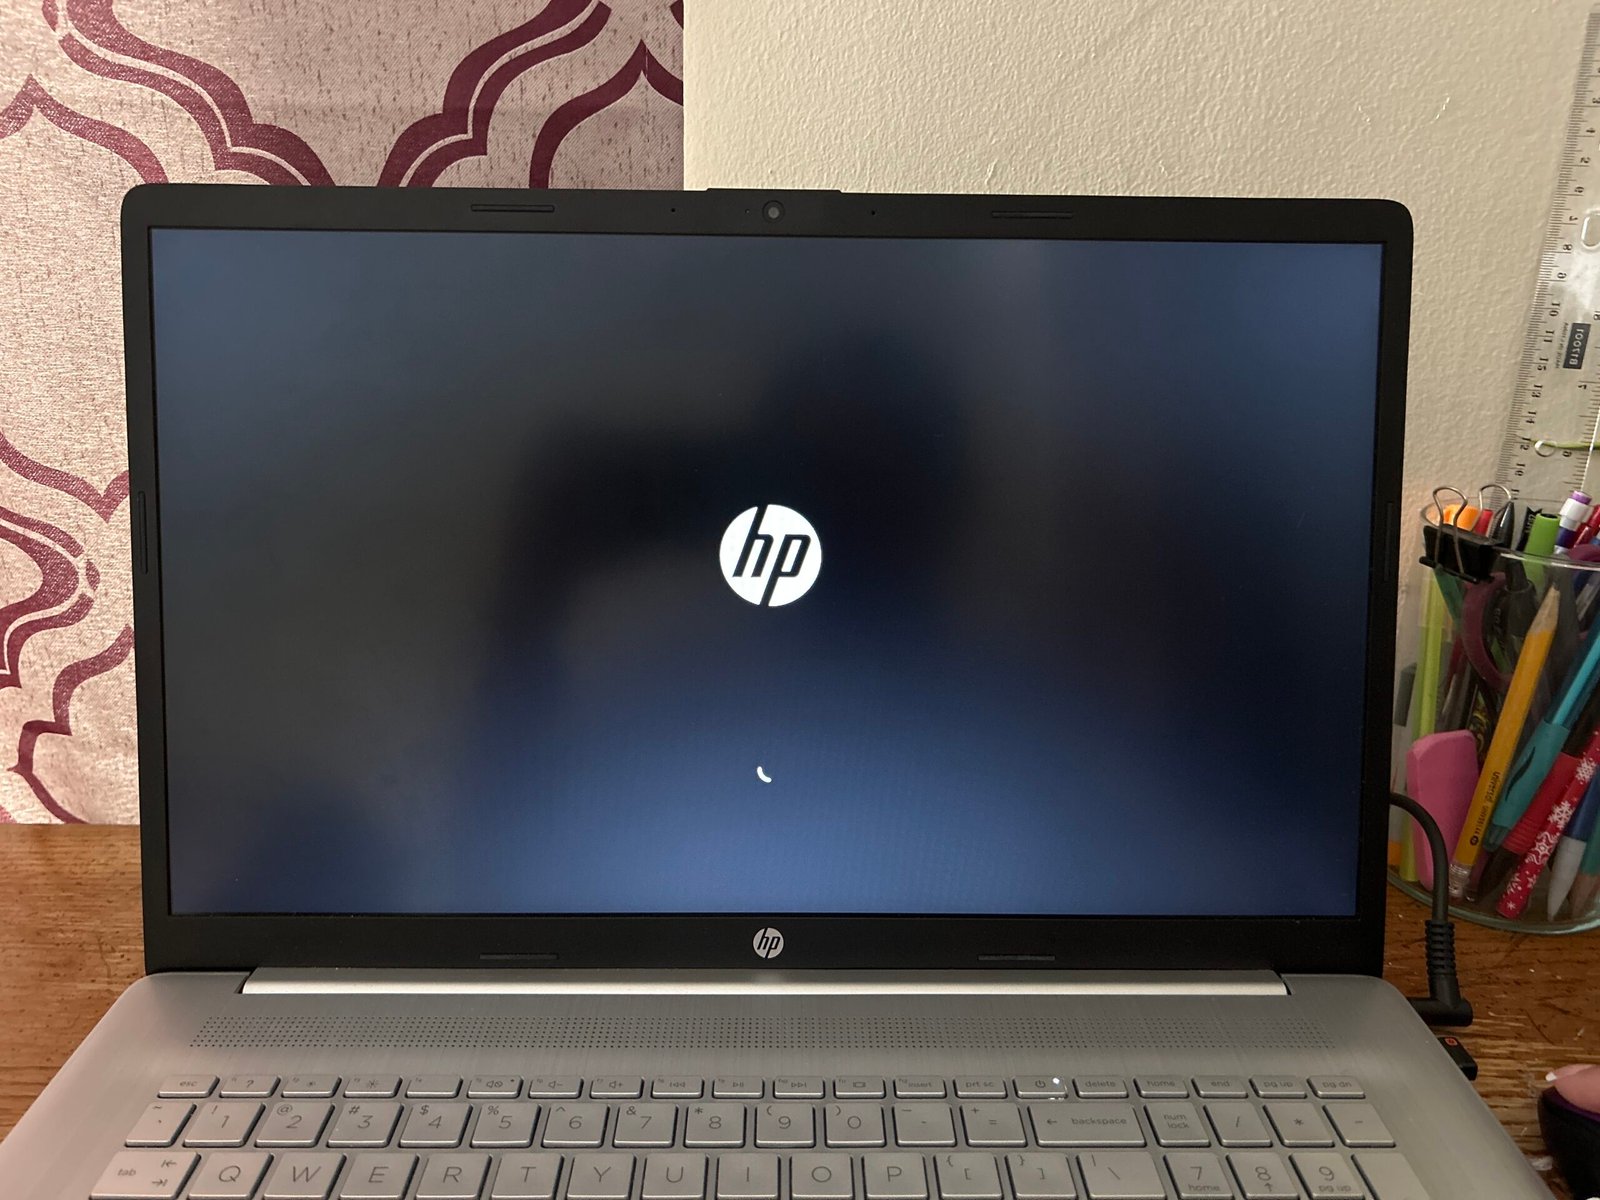 HP Laptop Stuck on Loading Screen?